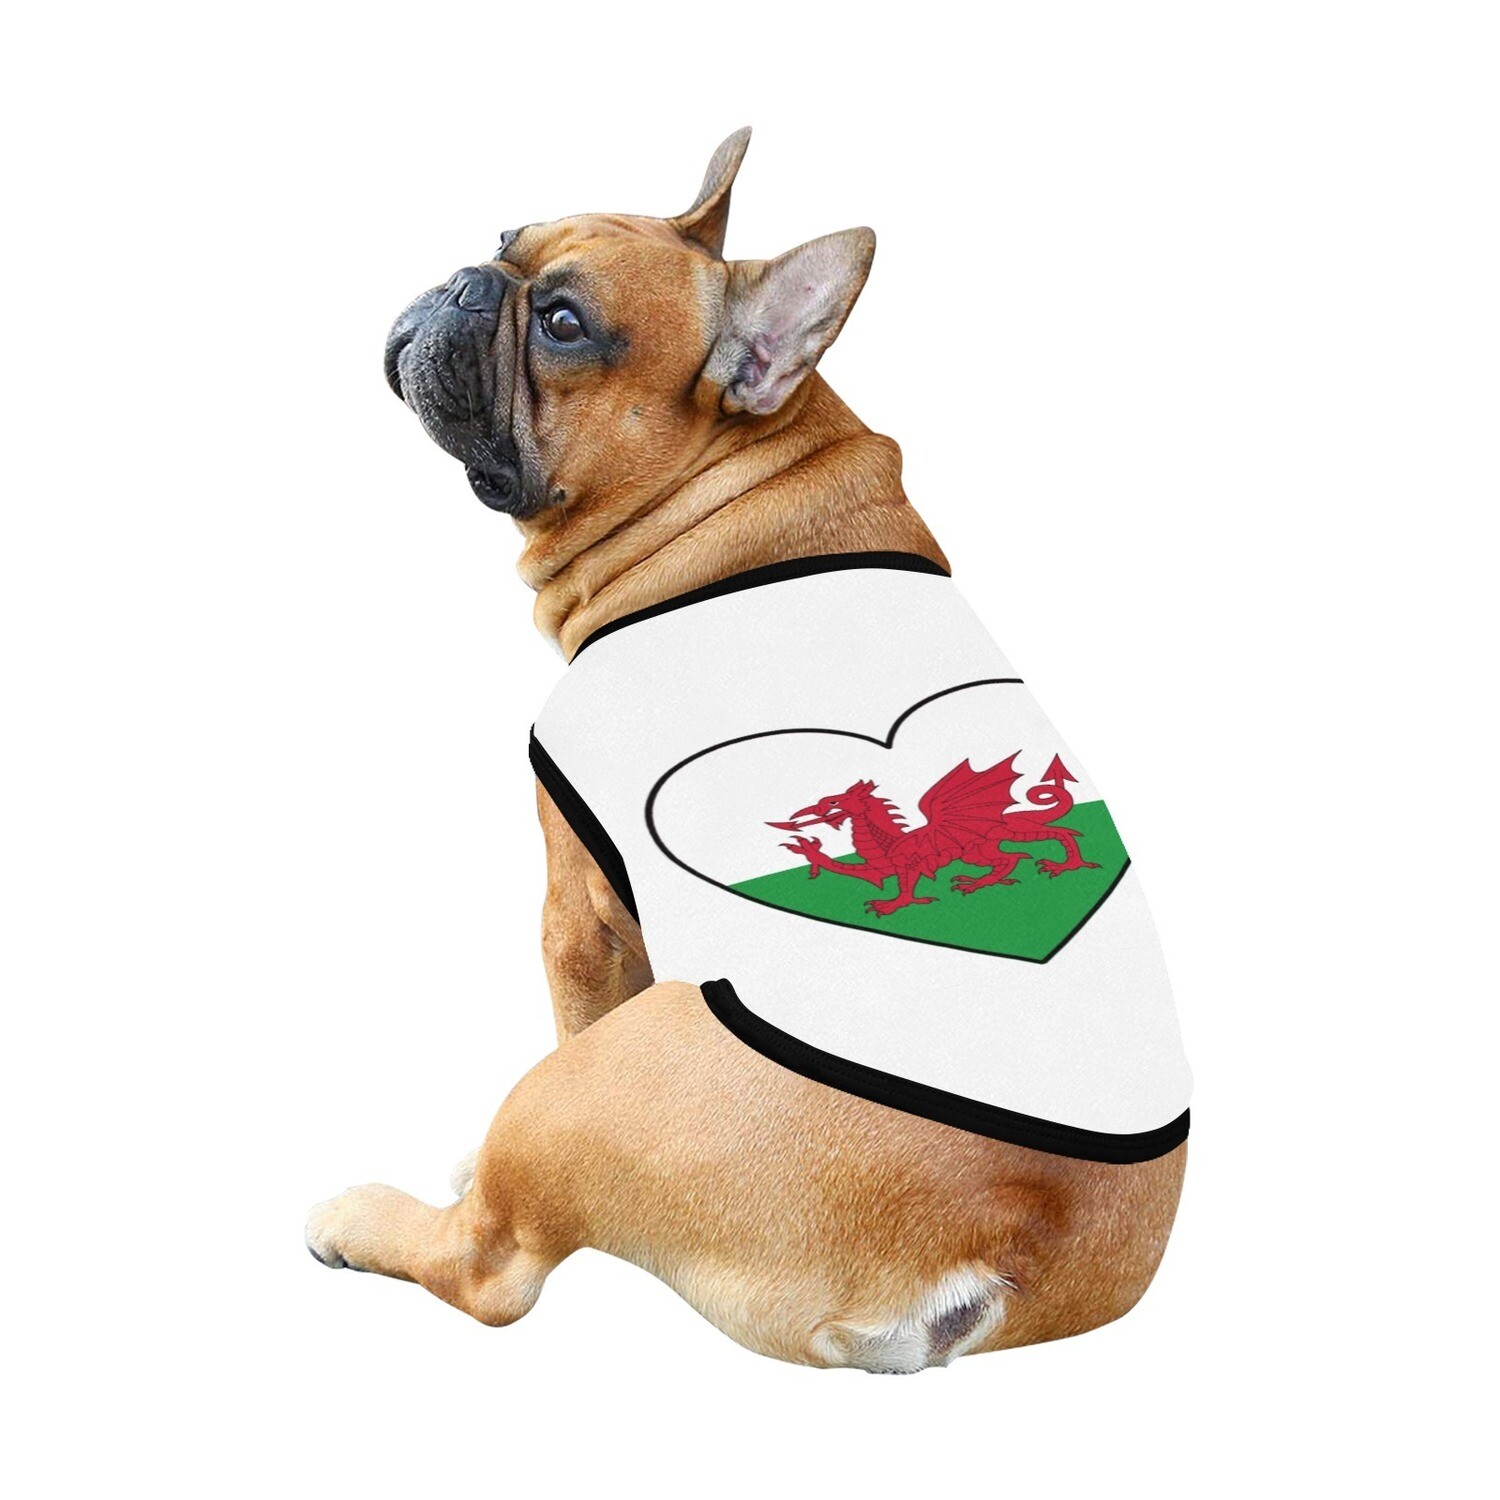 🐕🏴󠁧󠁢󠁷󠁬󠁳󠁿 I love Wales dog t-shirt, dog gift, dog tank top, dog shirt, dog clothes, gift, 7 sizes XS to 3XL, Welsh dragon flag, heart shape